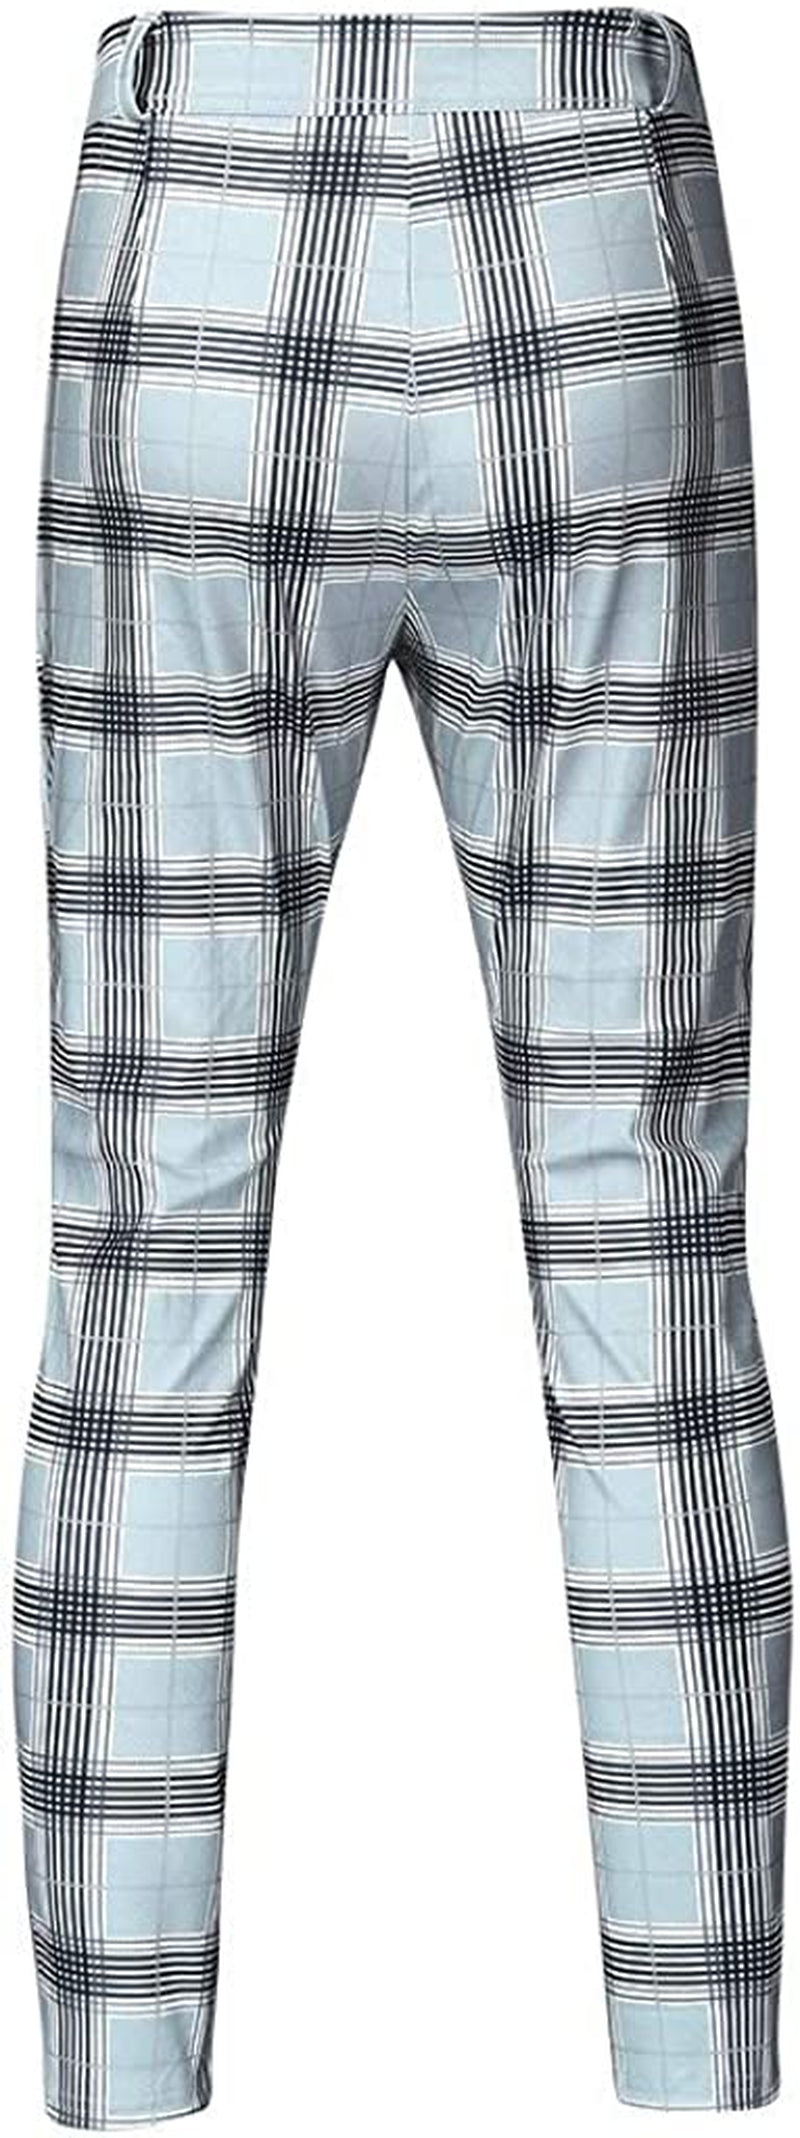 Men Dress Pants,Casual Plaid Stretch Flat-Front Skinny Business Pencil Long Pants Trousers Pocket